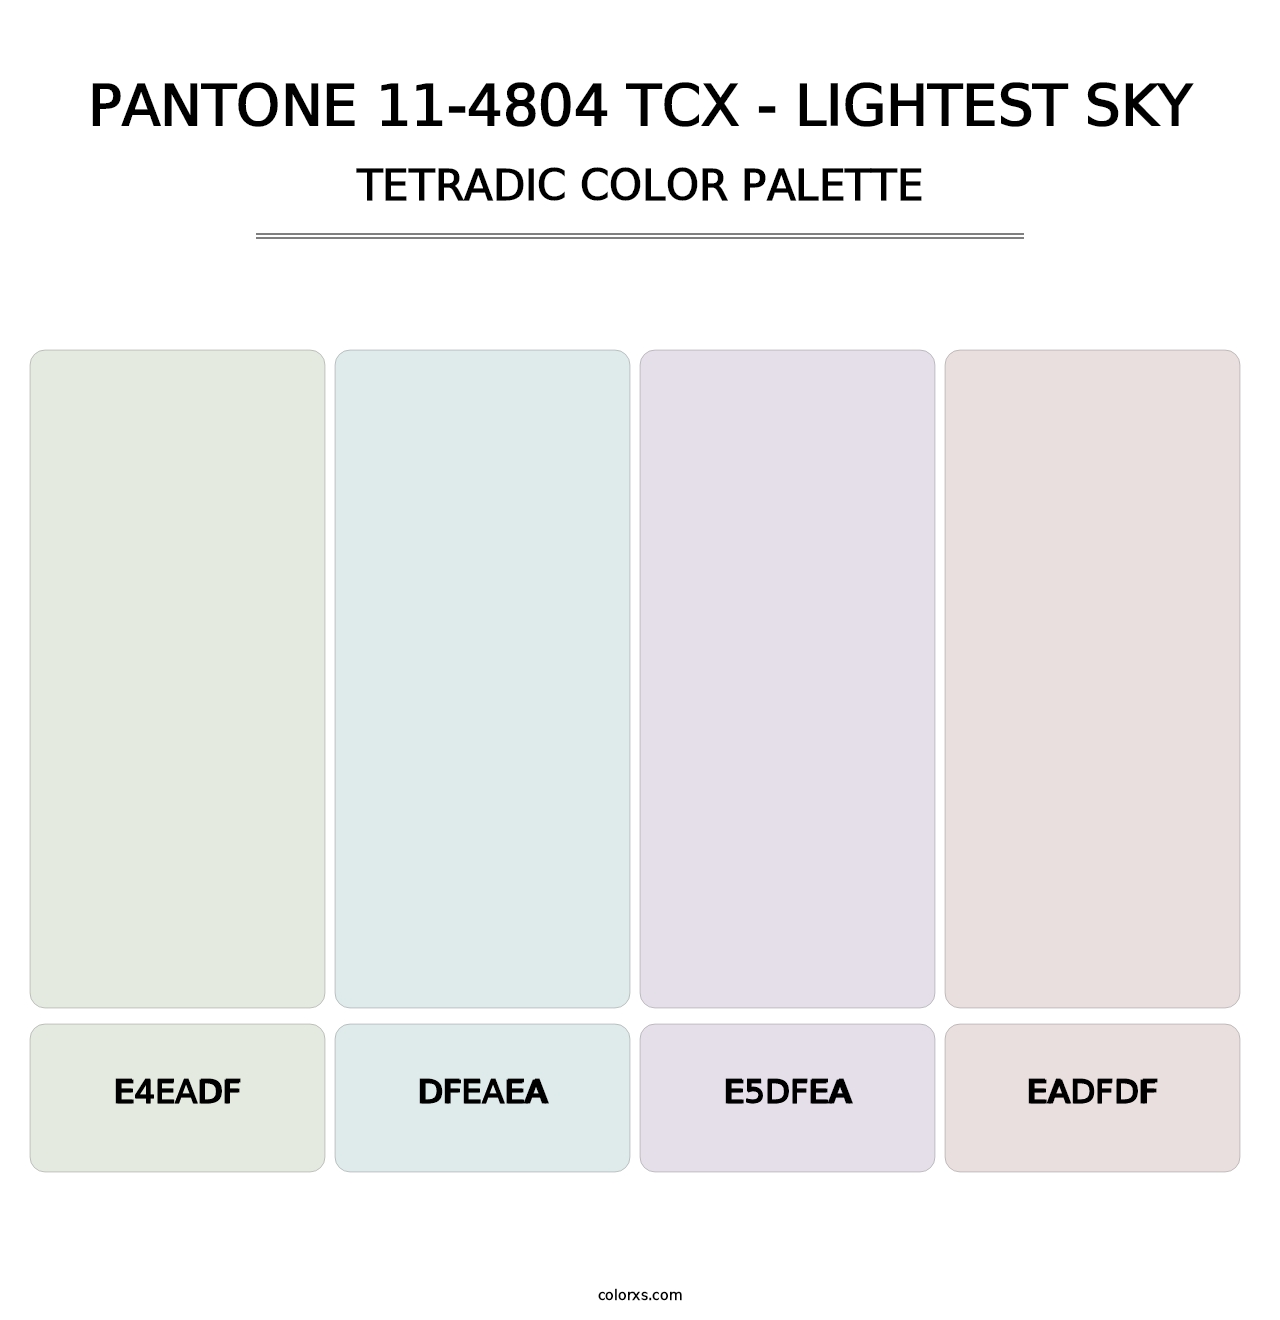 PANTONE 11-4804 TCX - Lightest Sky - Tetradic Color Palette